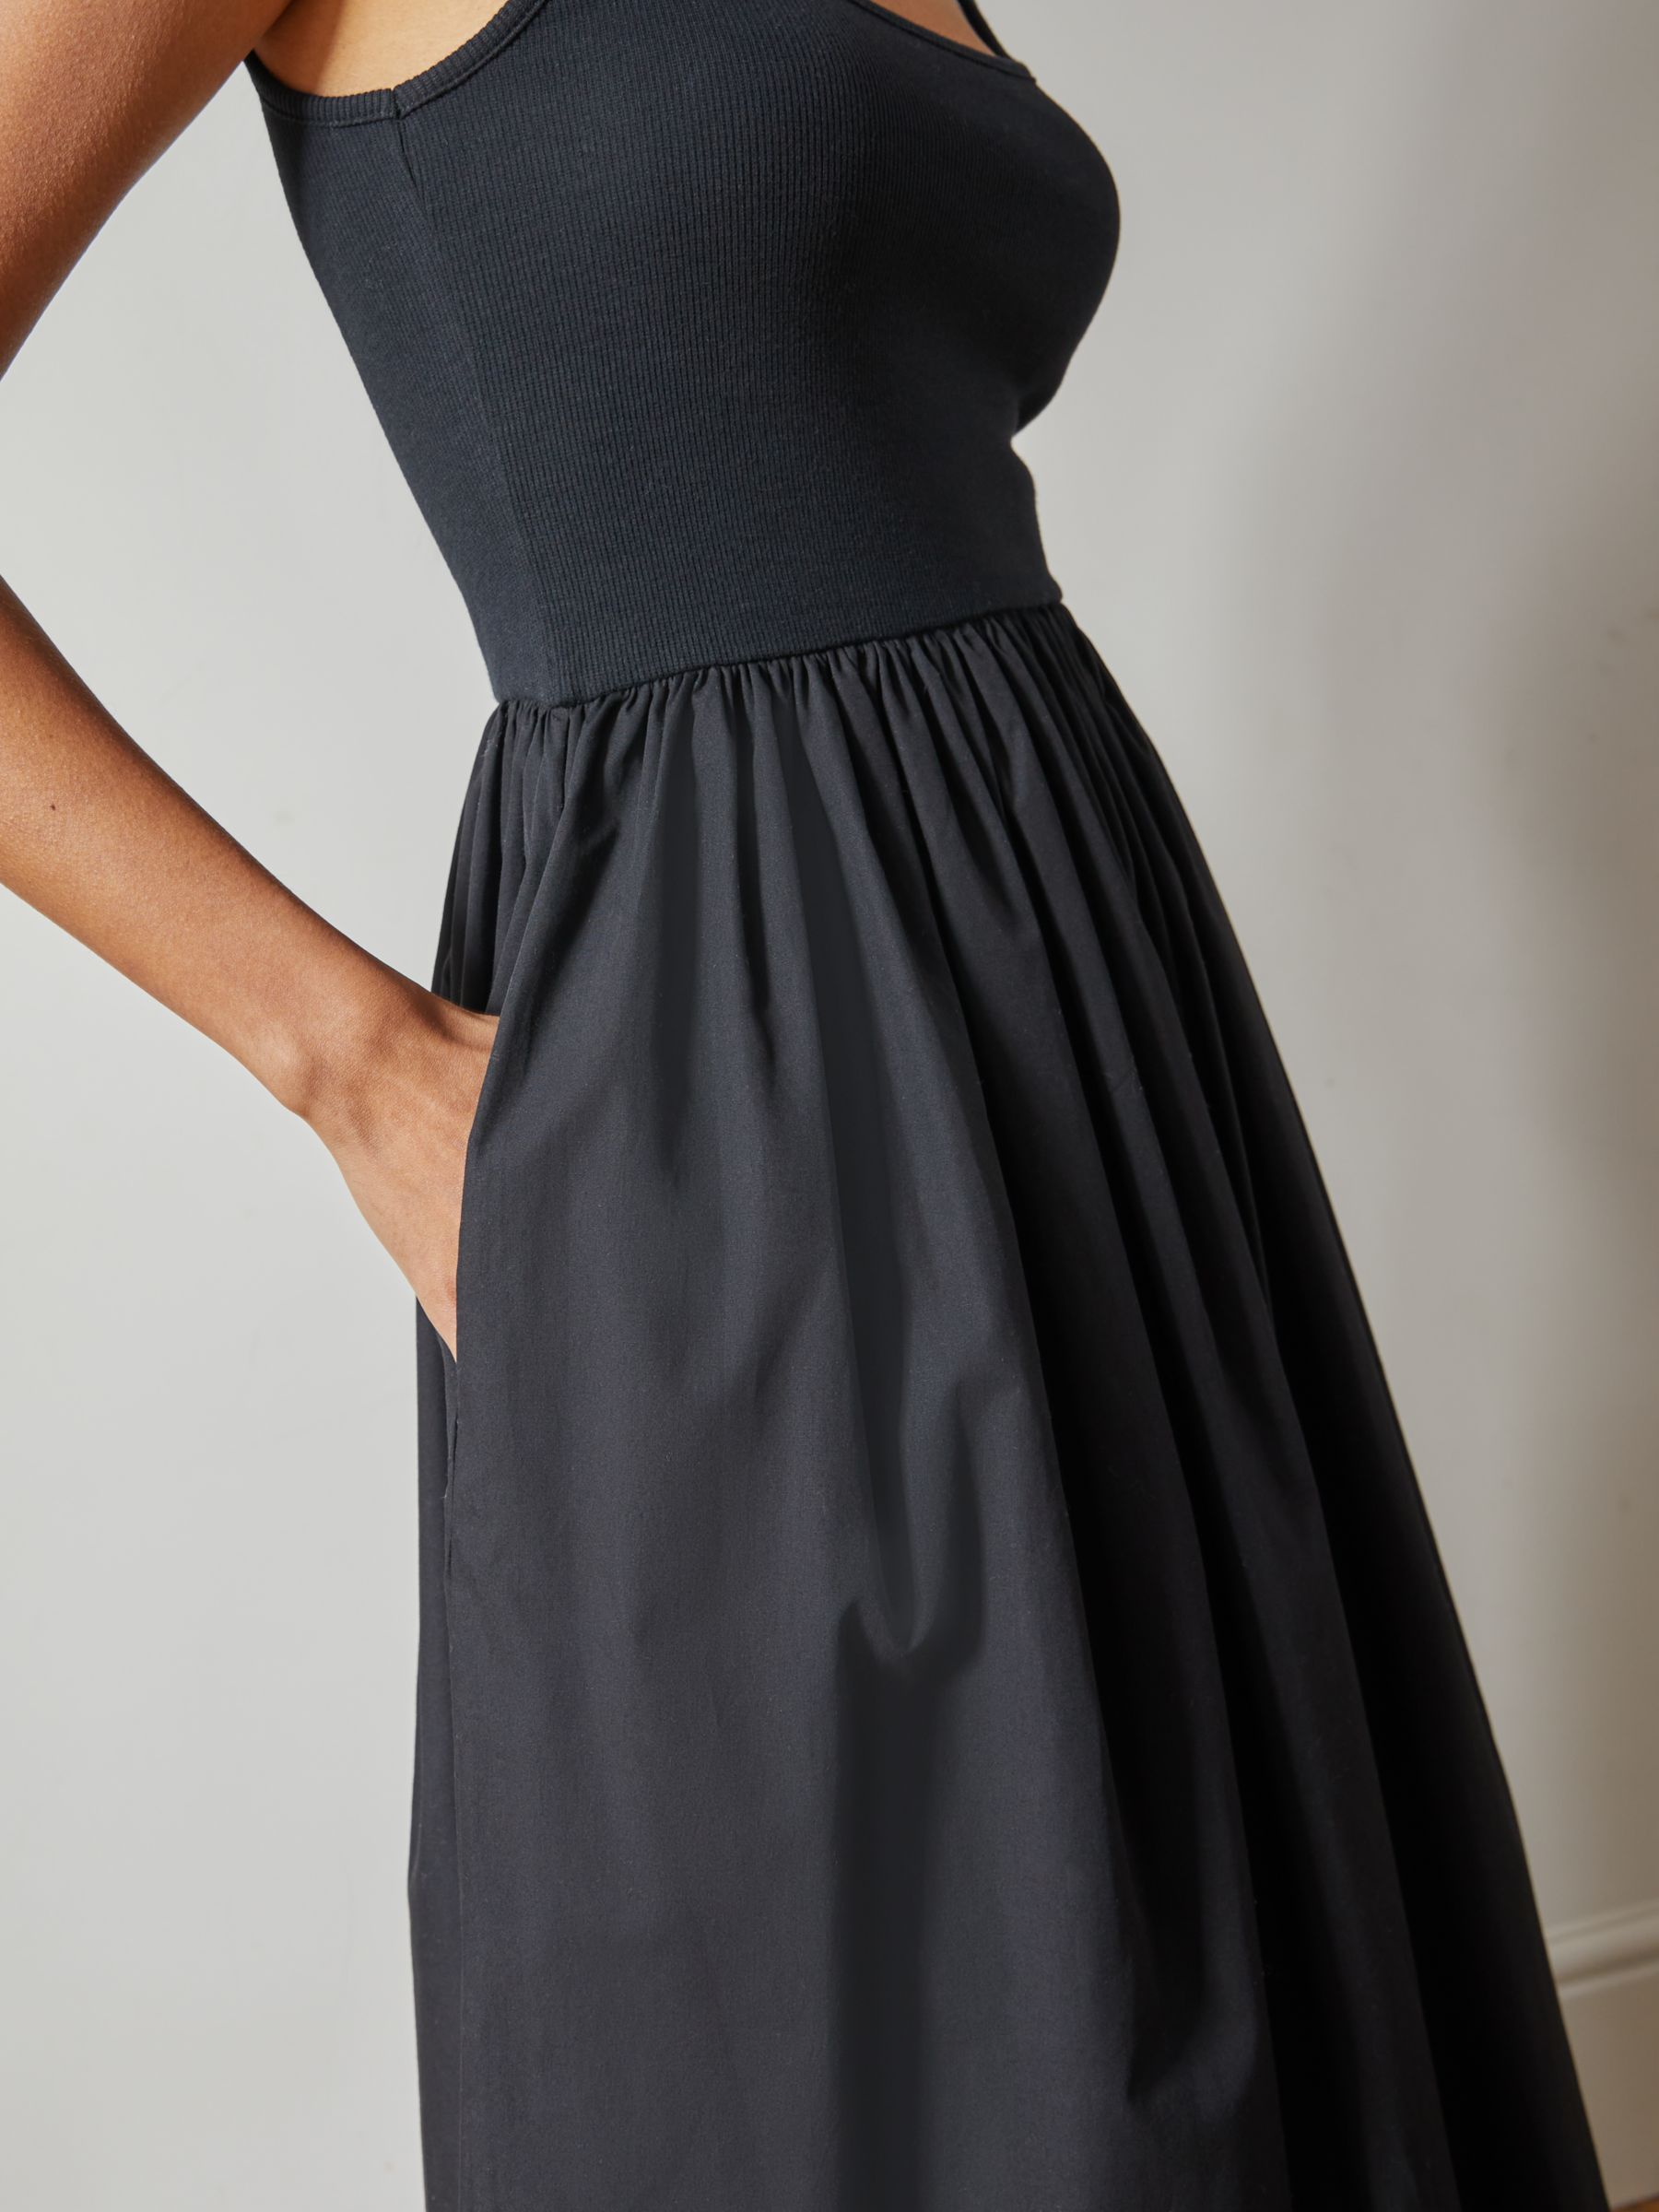 Albaray Square Neck Midi Dress, Black, 8